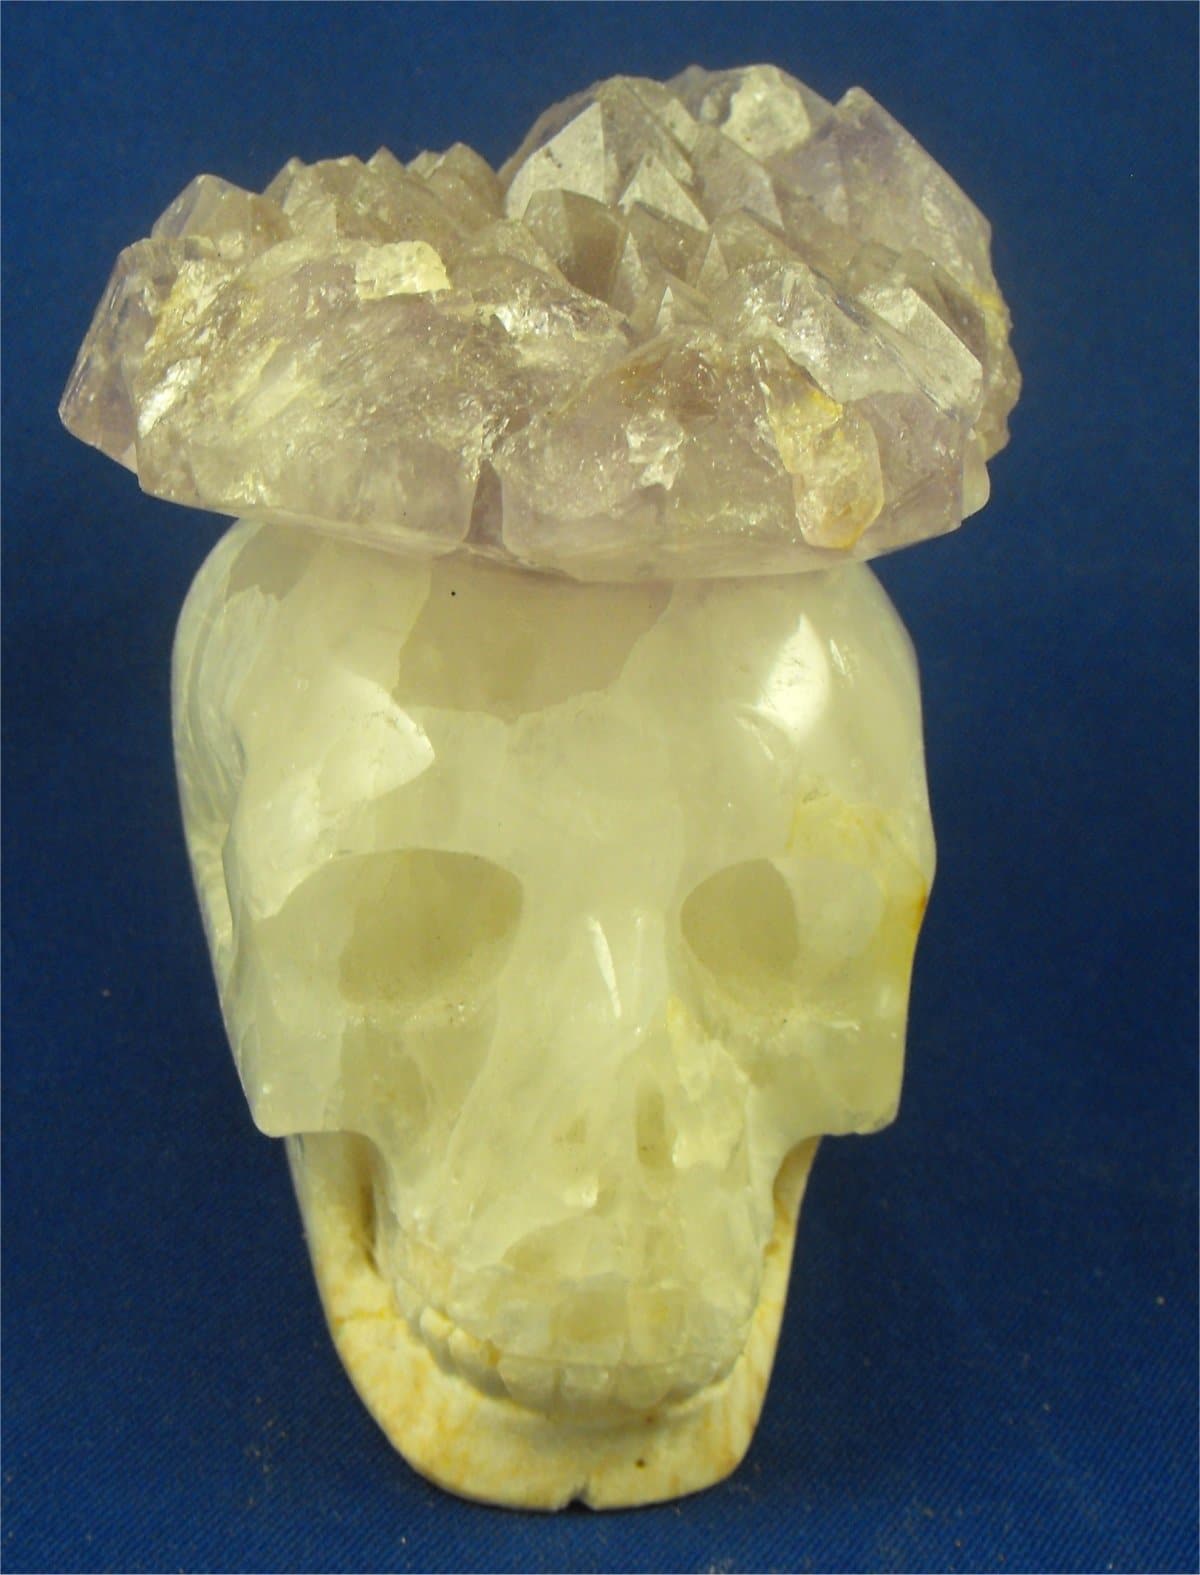 Metaphysical Healing Properties Of Crystal Skulls